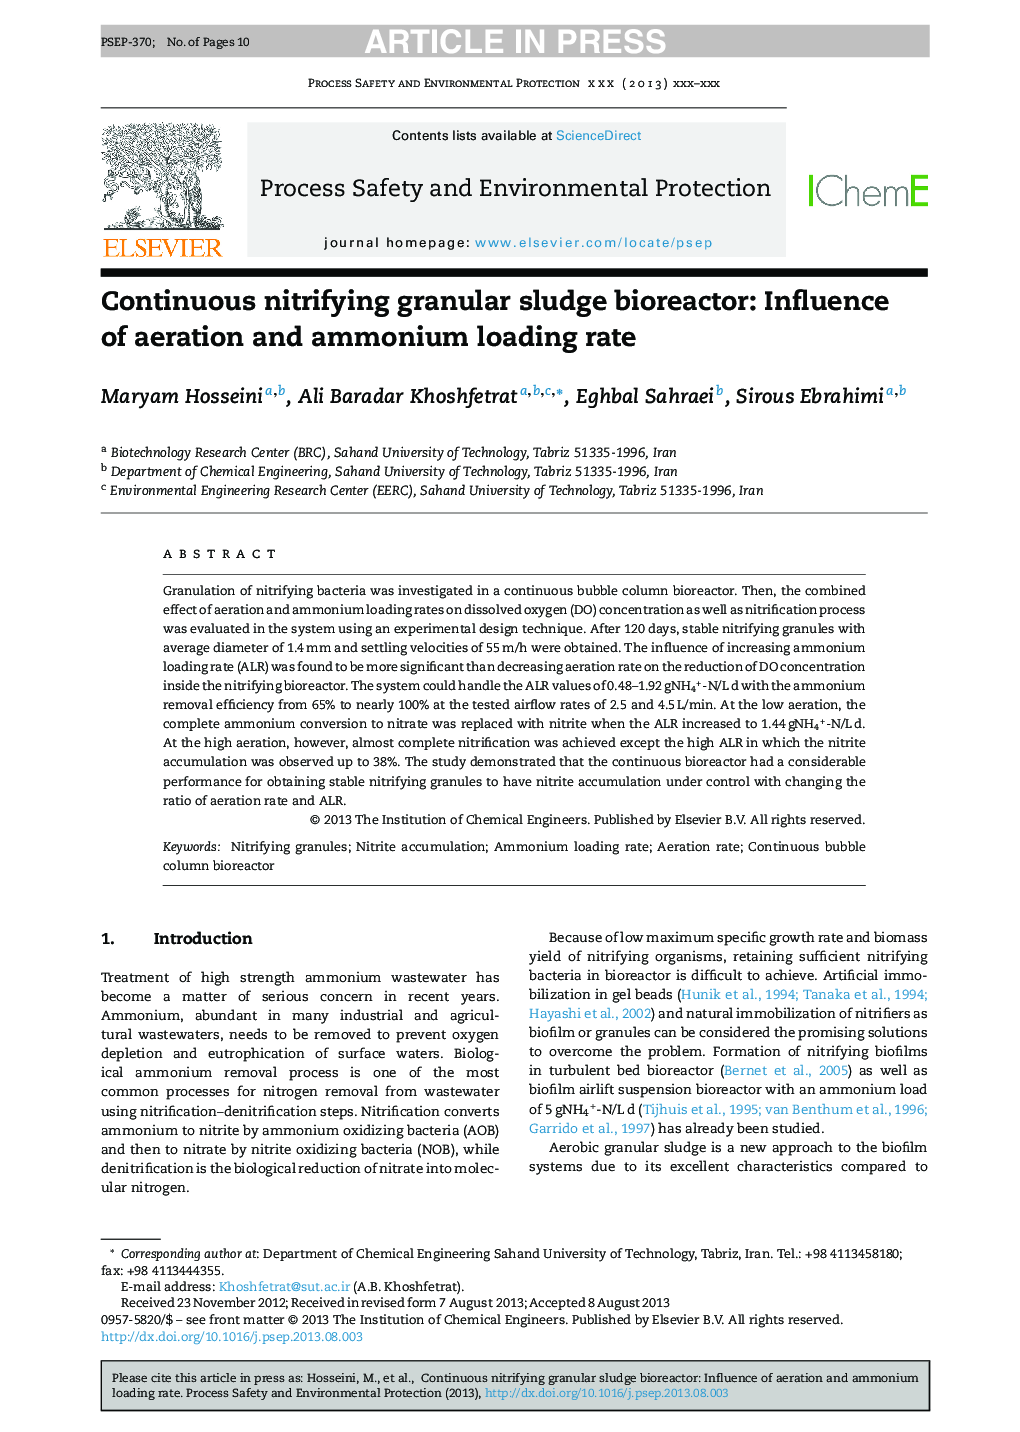 Continuous nitrifying granular sludge bioreactor: Influence of aeration and ammonium loading rate